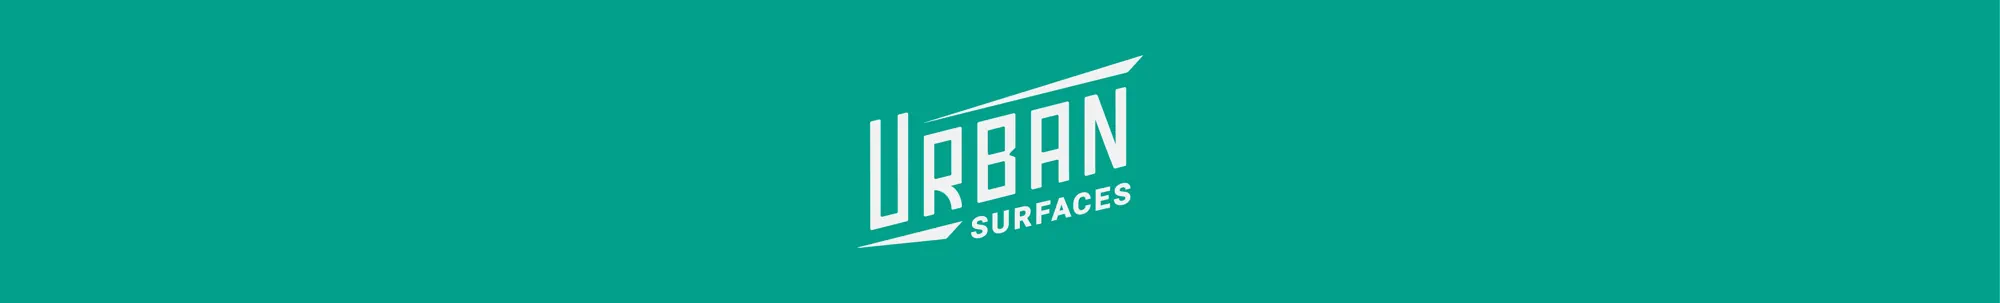 Urban Surfaces logo.